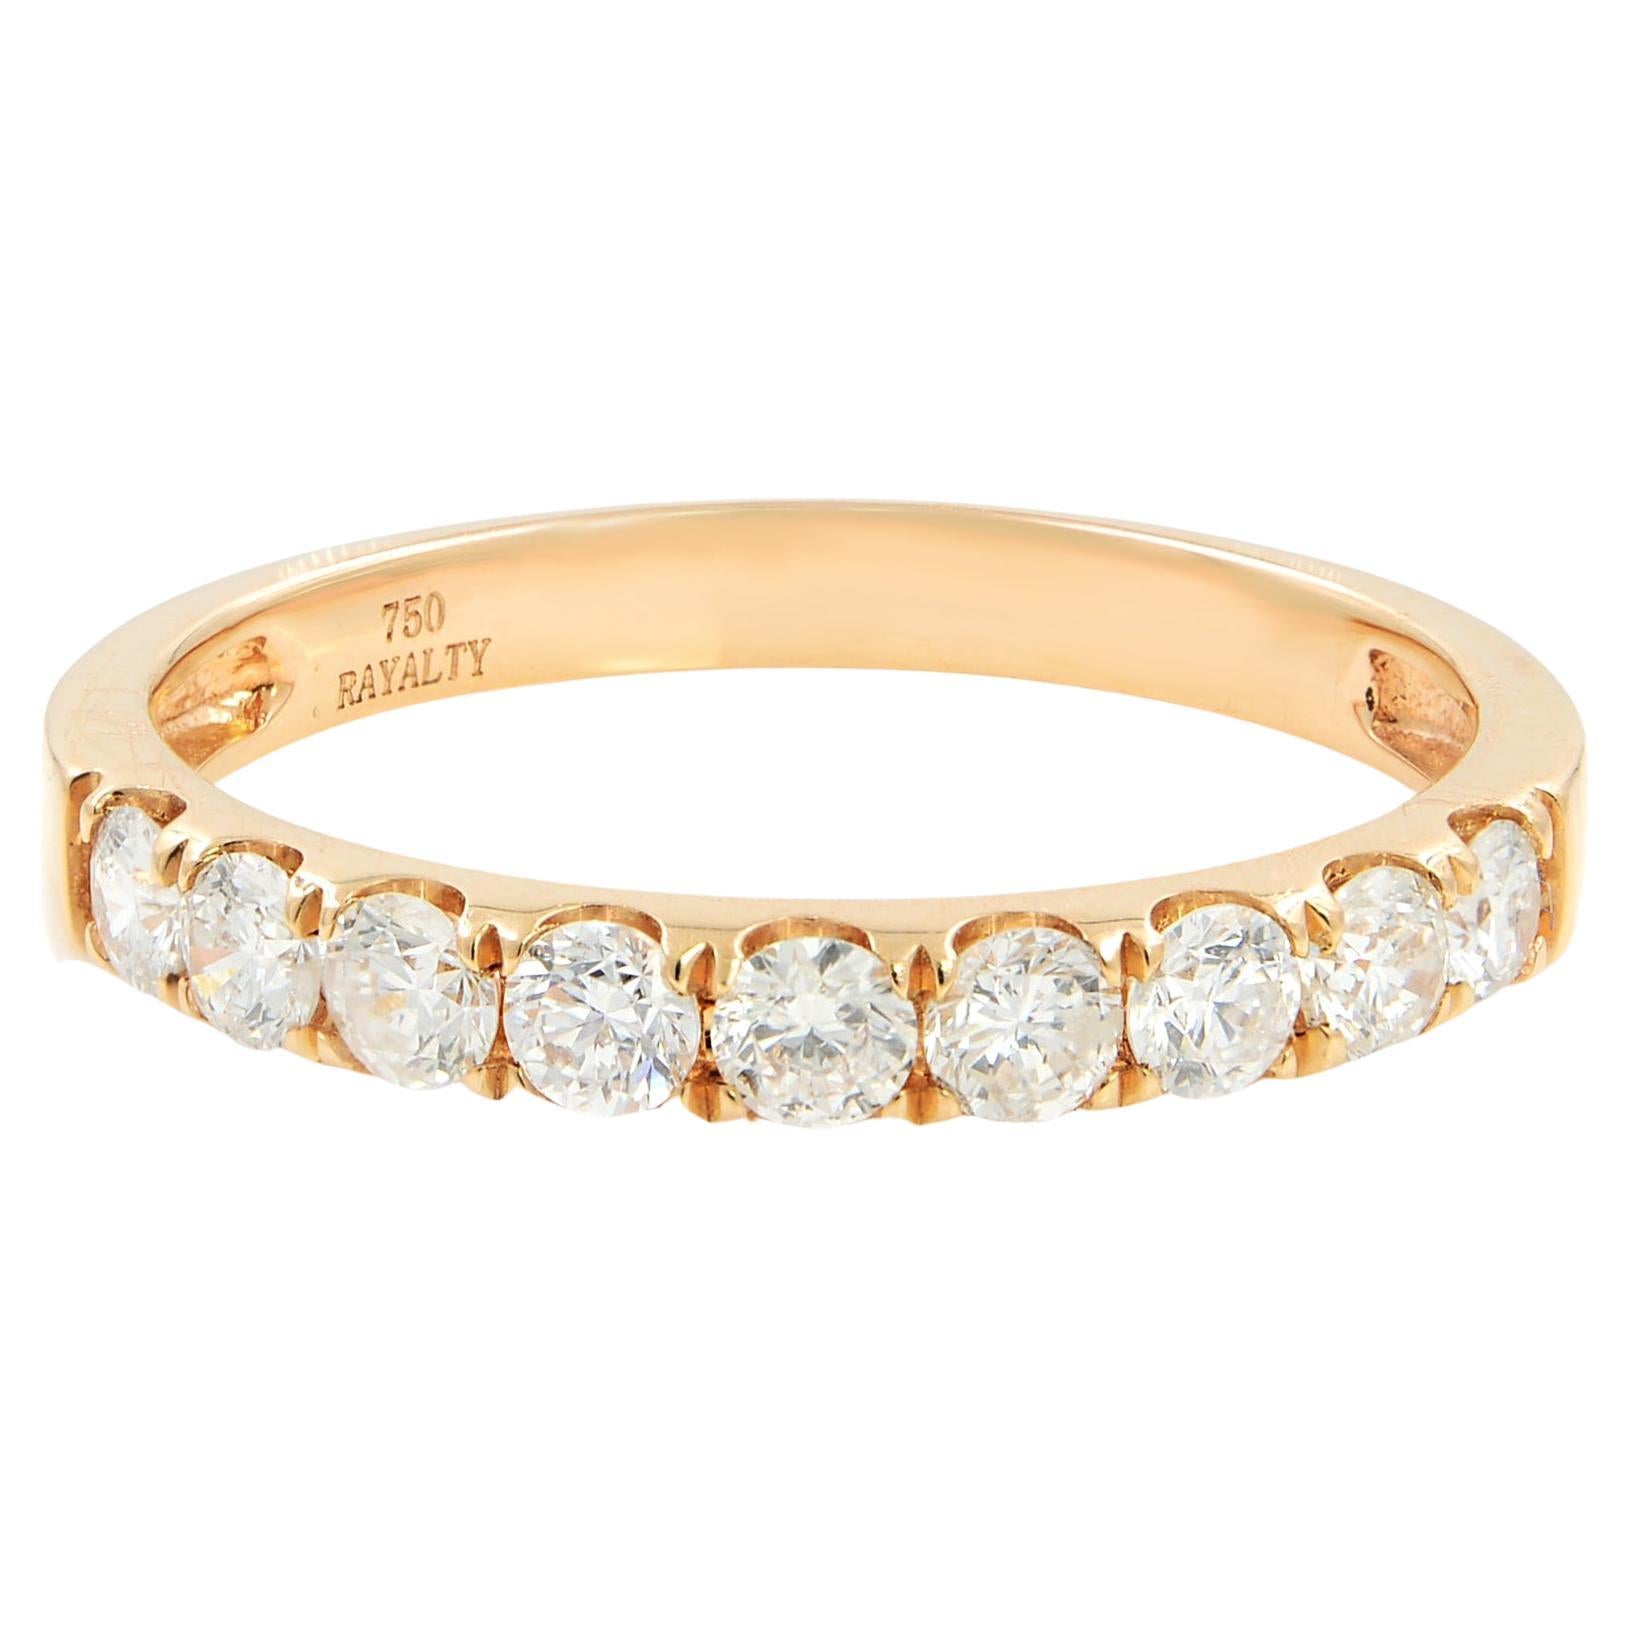 Rachel Koen Scoop Pave Diamond Wedding Band Ring 18K Rose Gold 0.53cttw